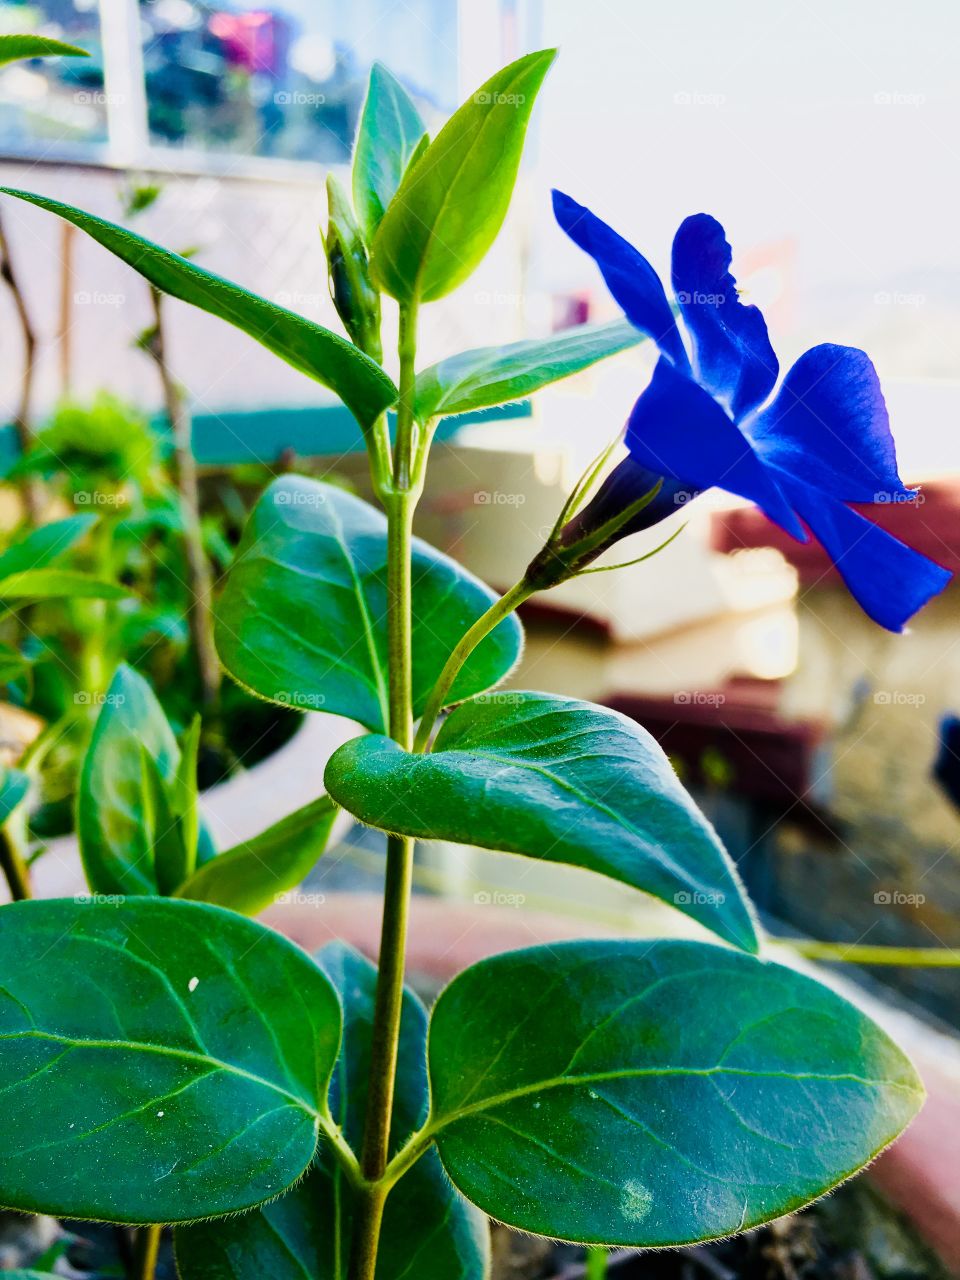 Blue flower 